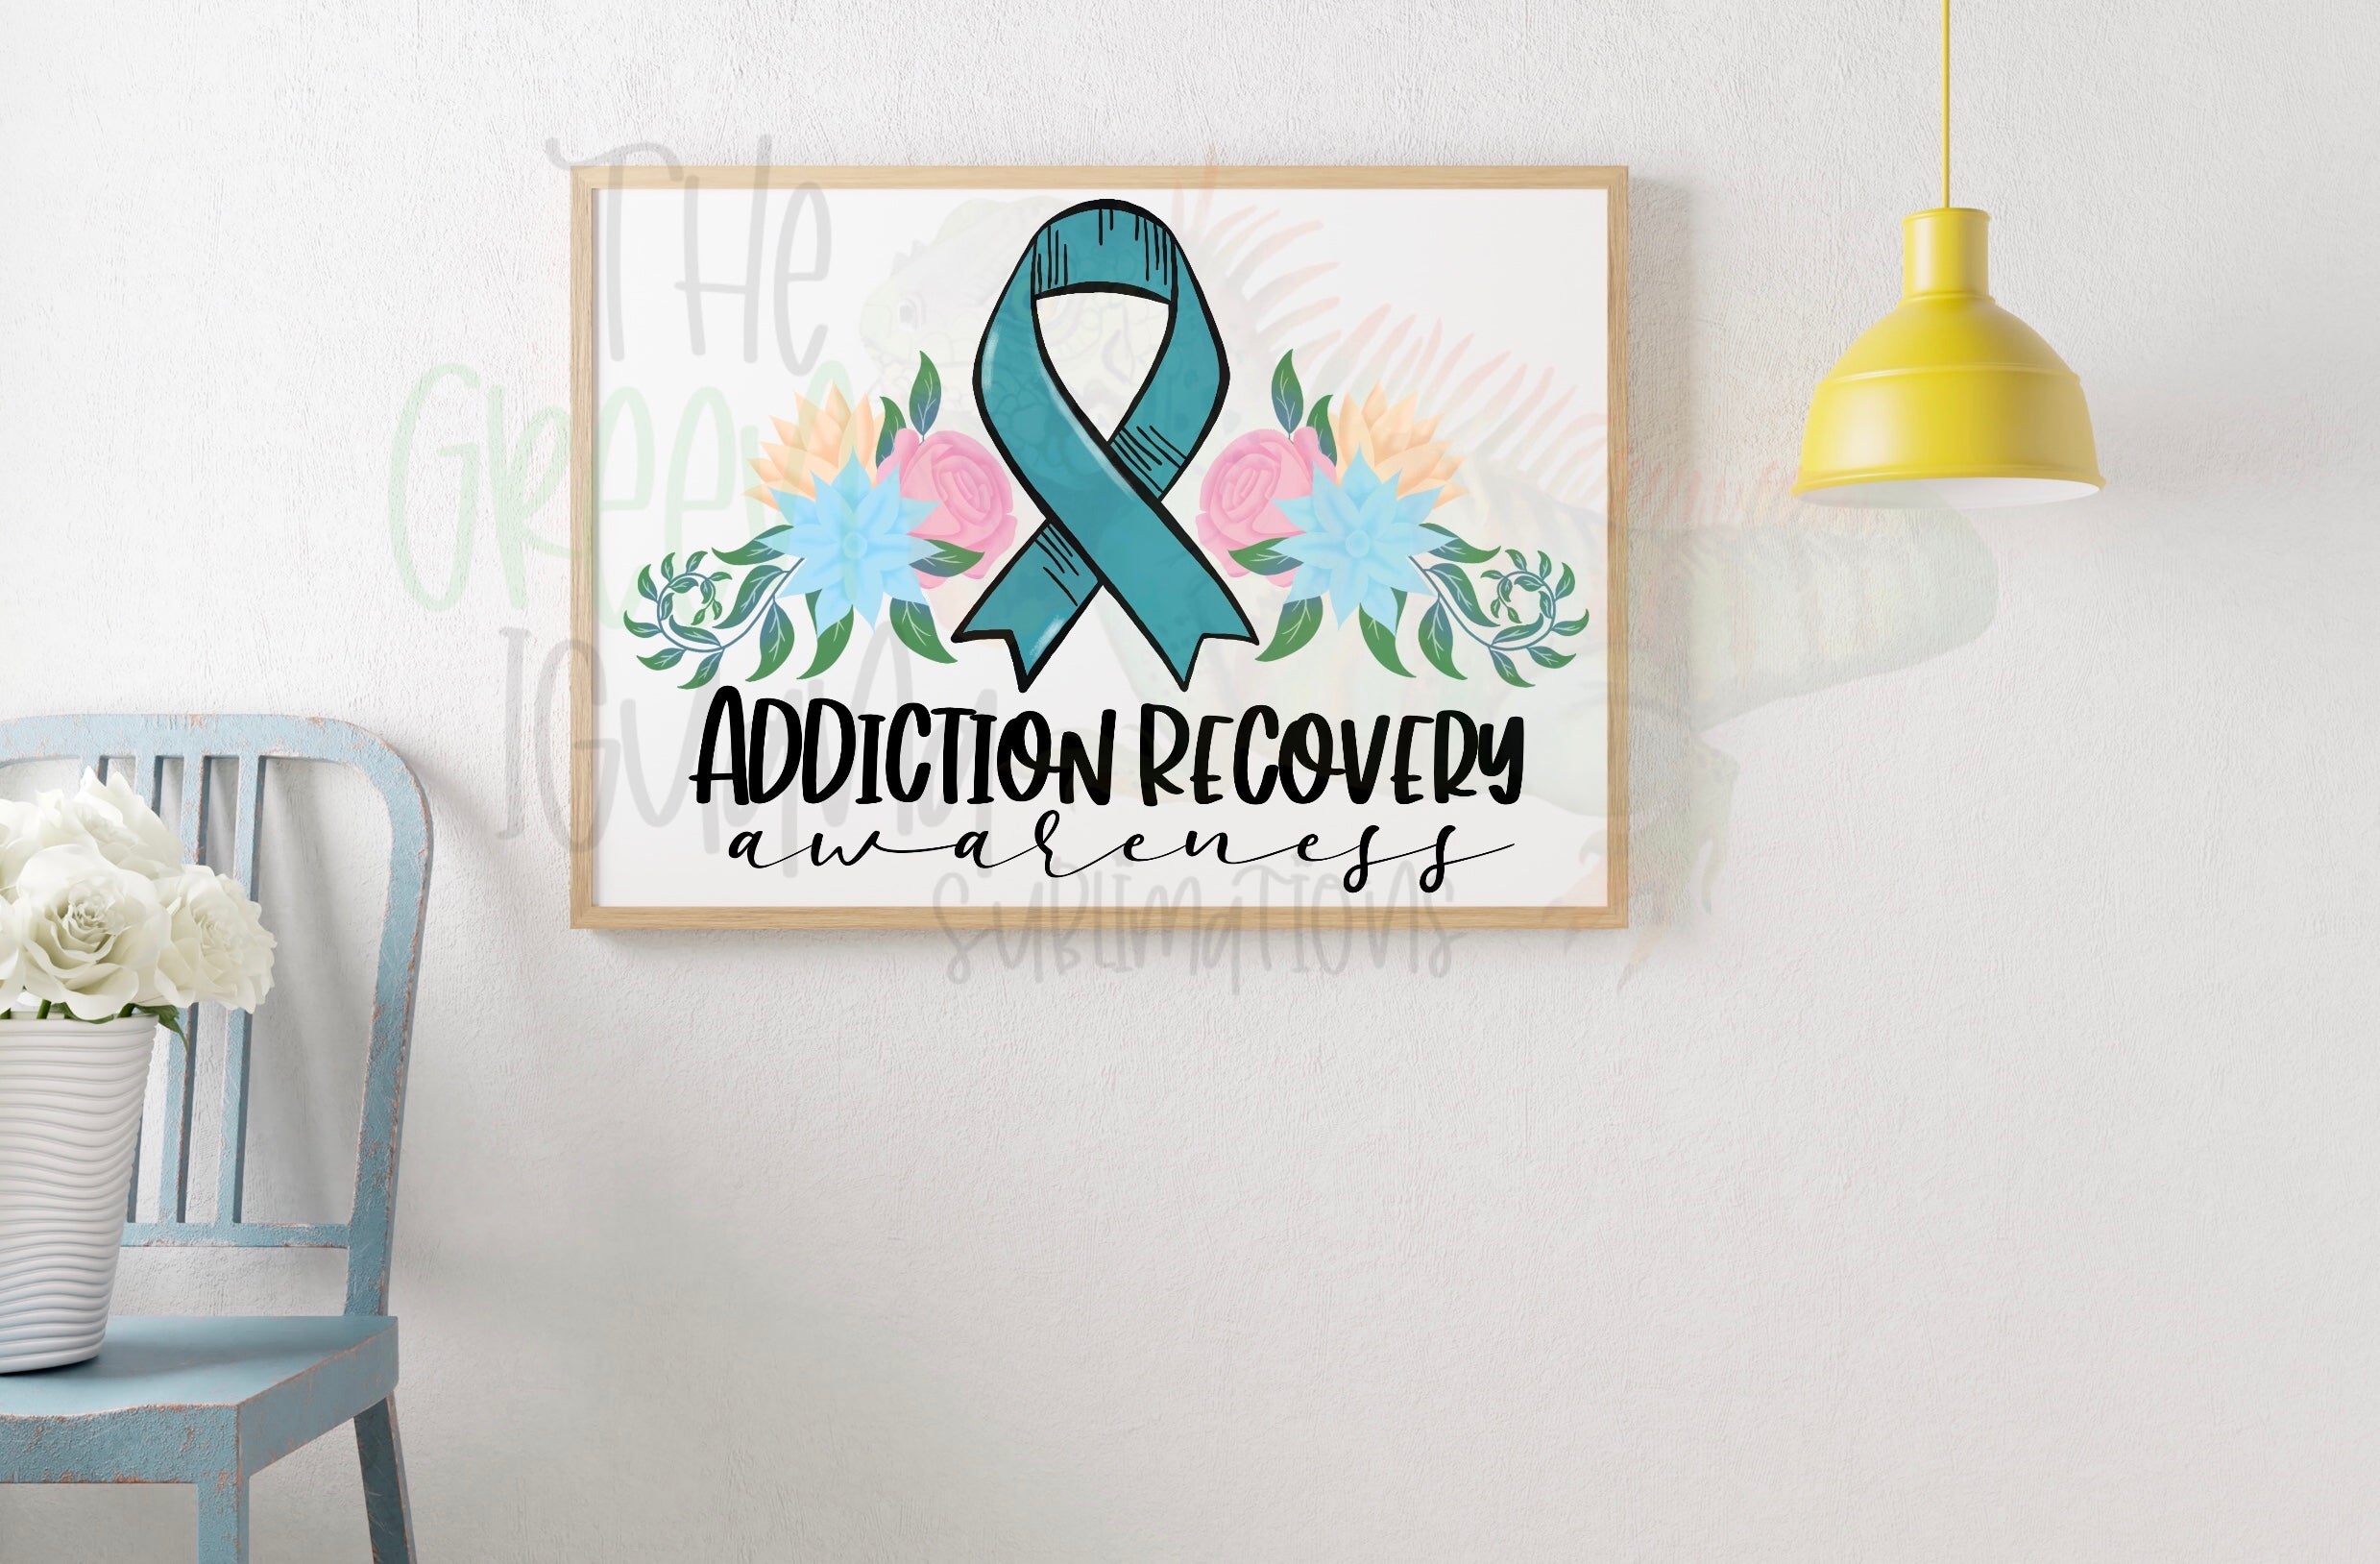 Addiction recovery awareness